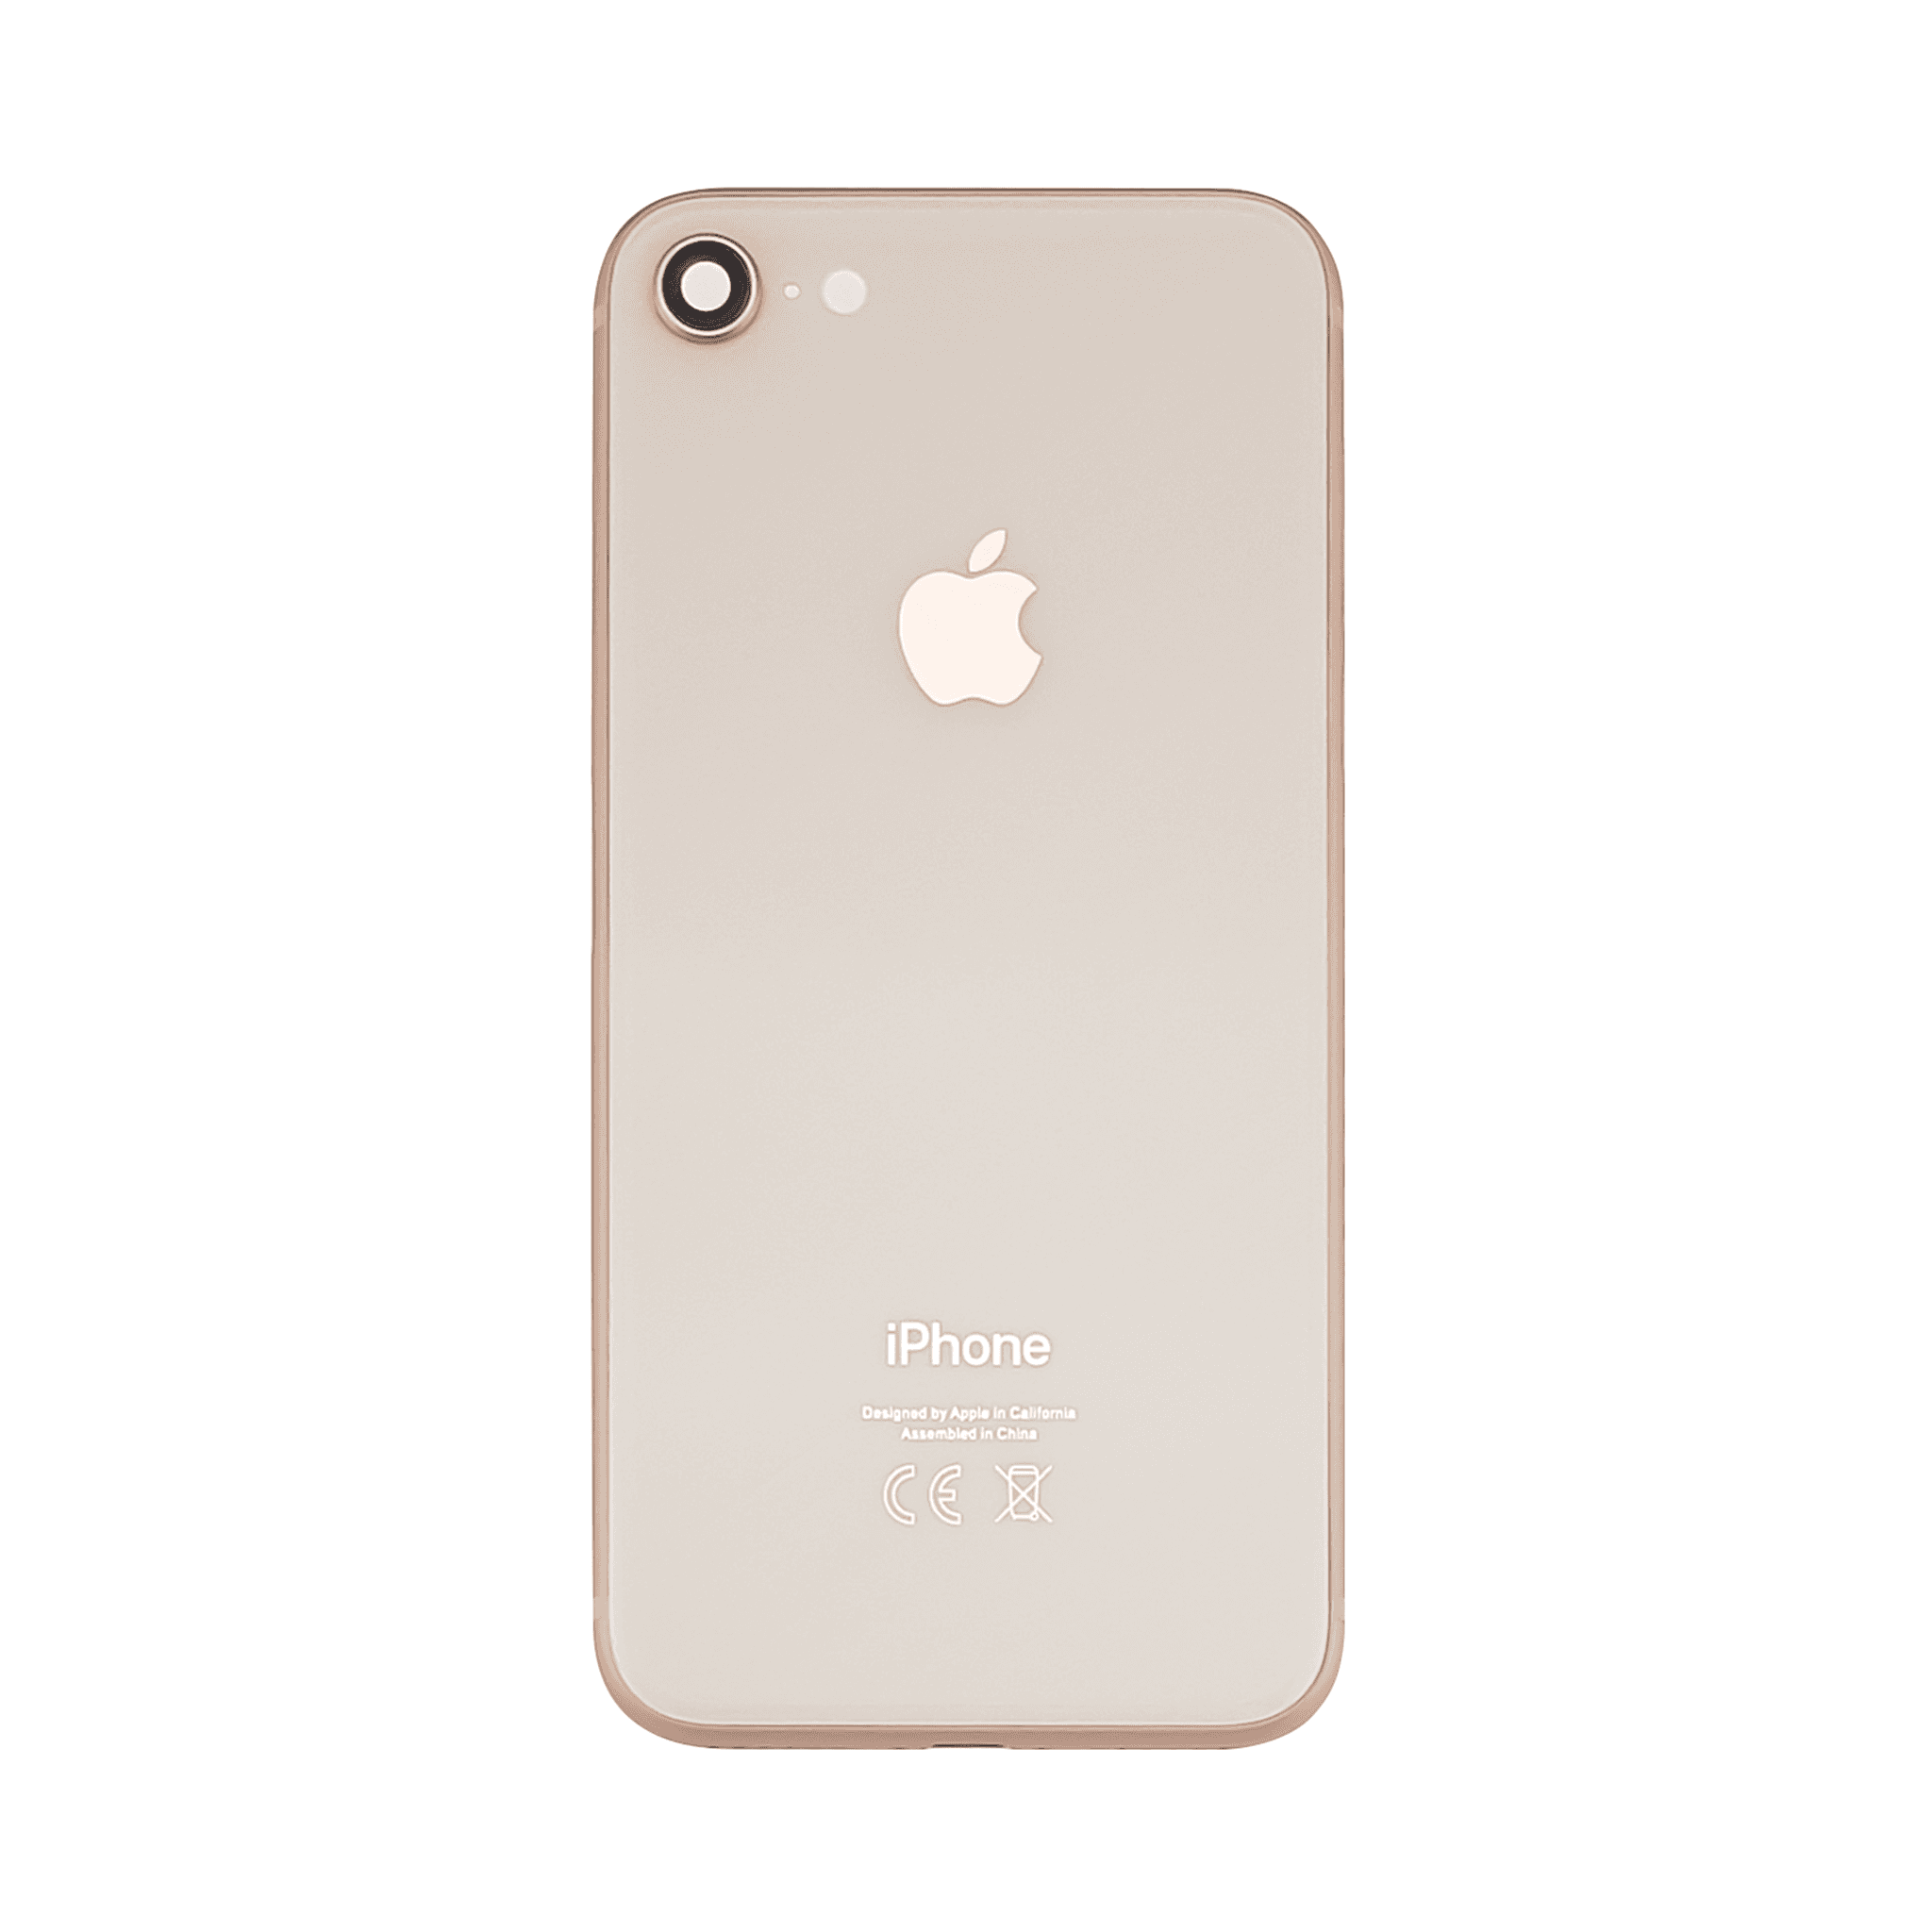 Korpus + kryt baterie iPhone 8 zlato - růžový